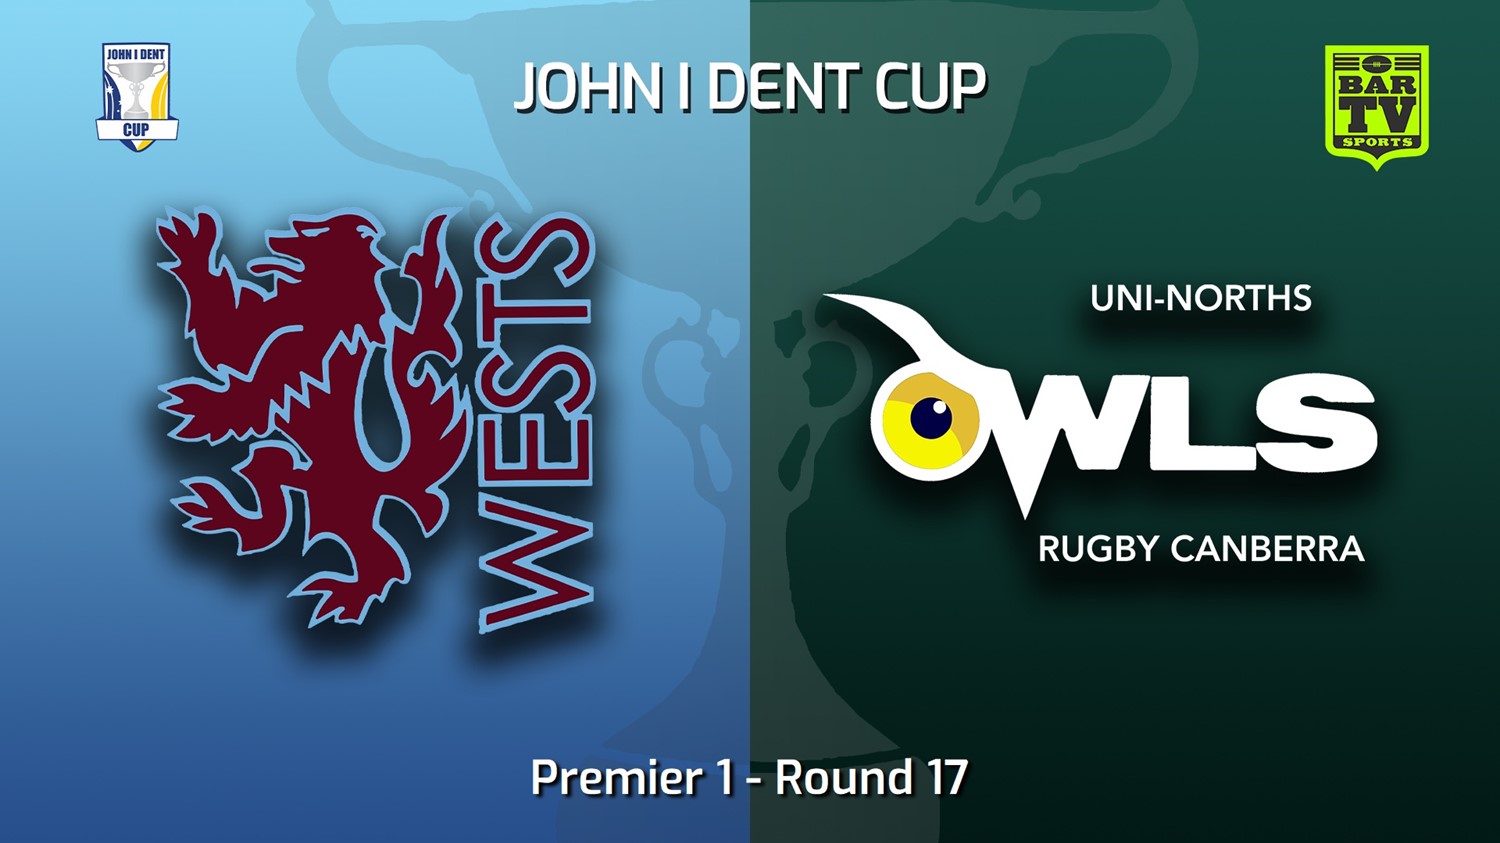 220820-John I Dent (ACT) Round 17 - Premier 1 - Wests Lions v UNI-Norths Minigame Slate Image